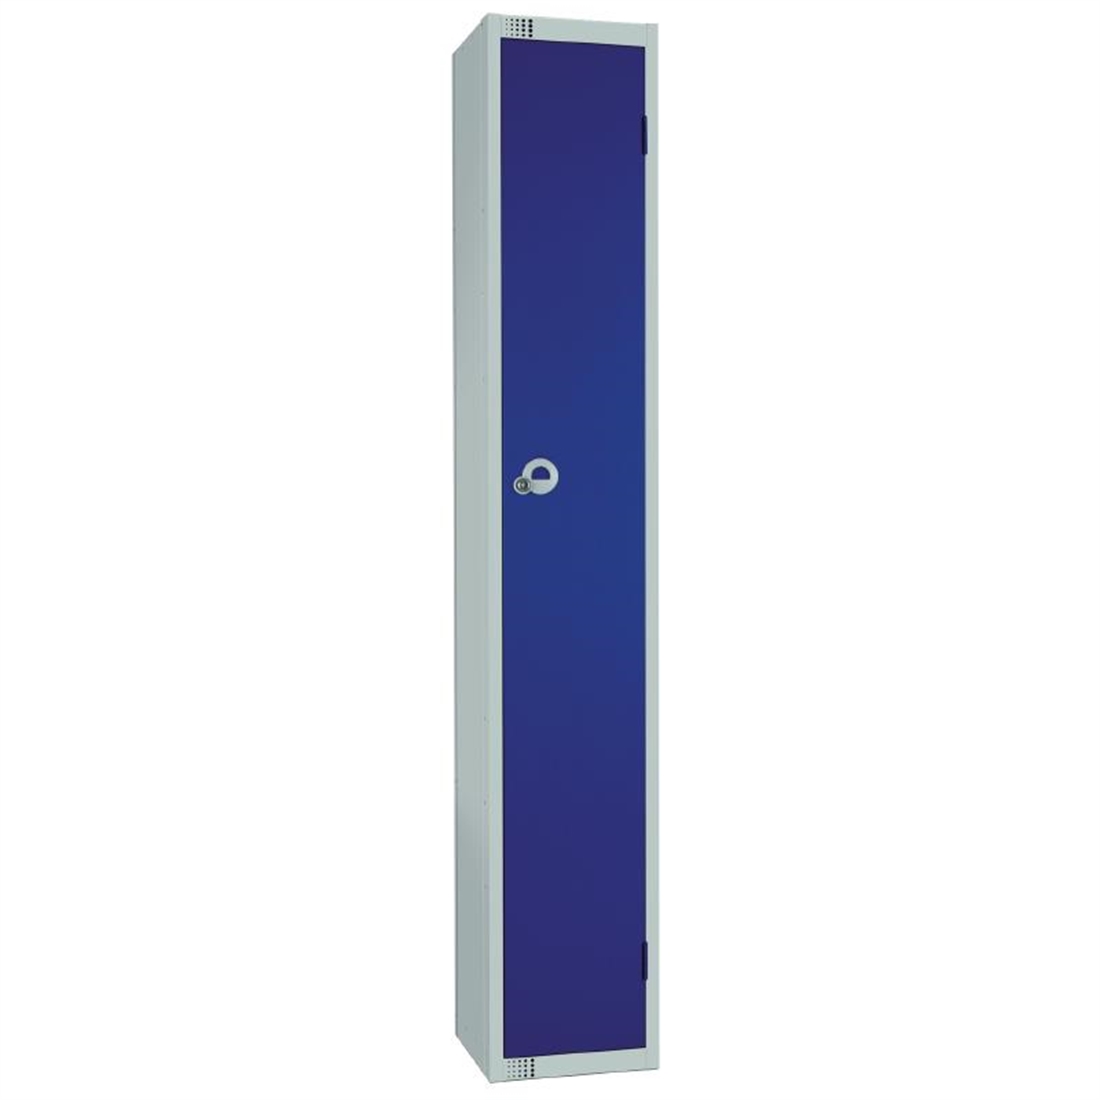 Elite Single Door Manual Combination Locker Locker Blue with Sloping Top